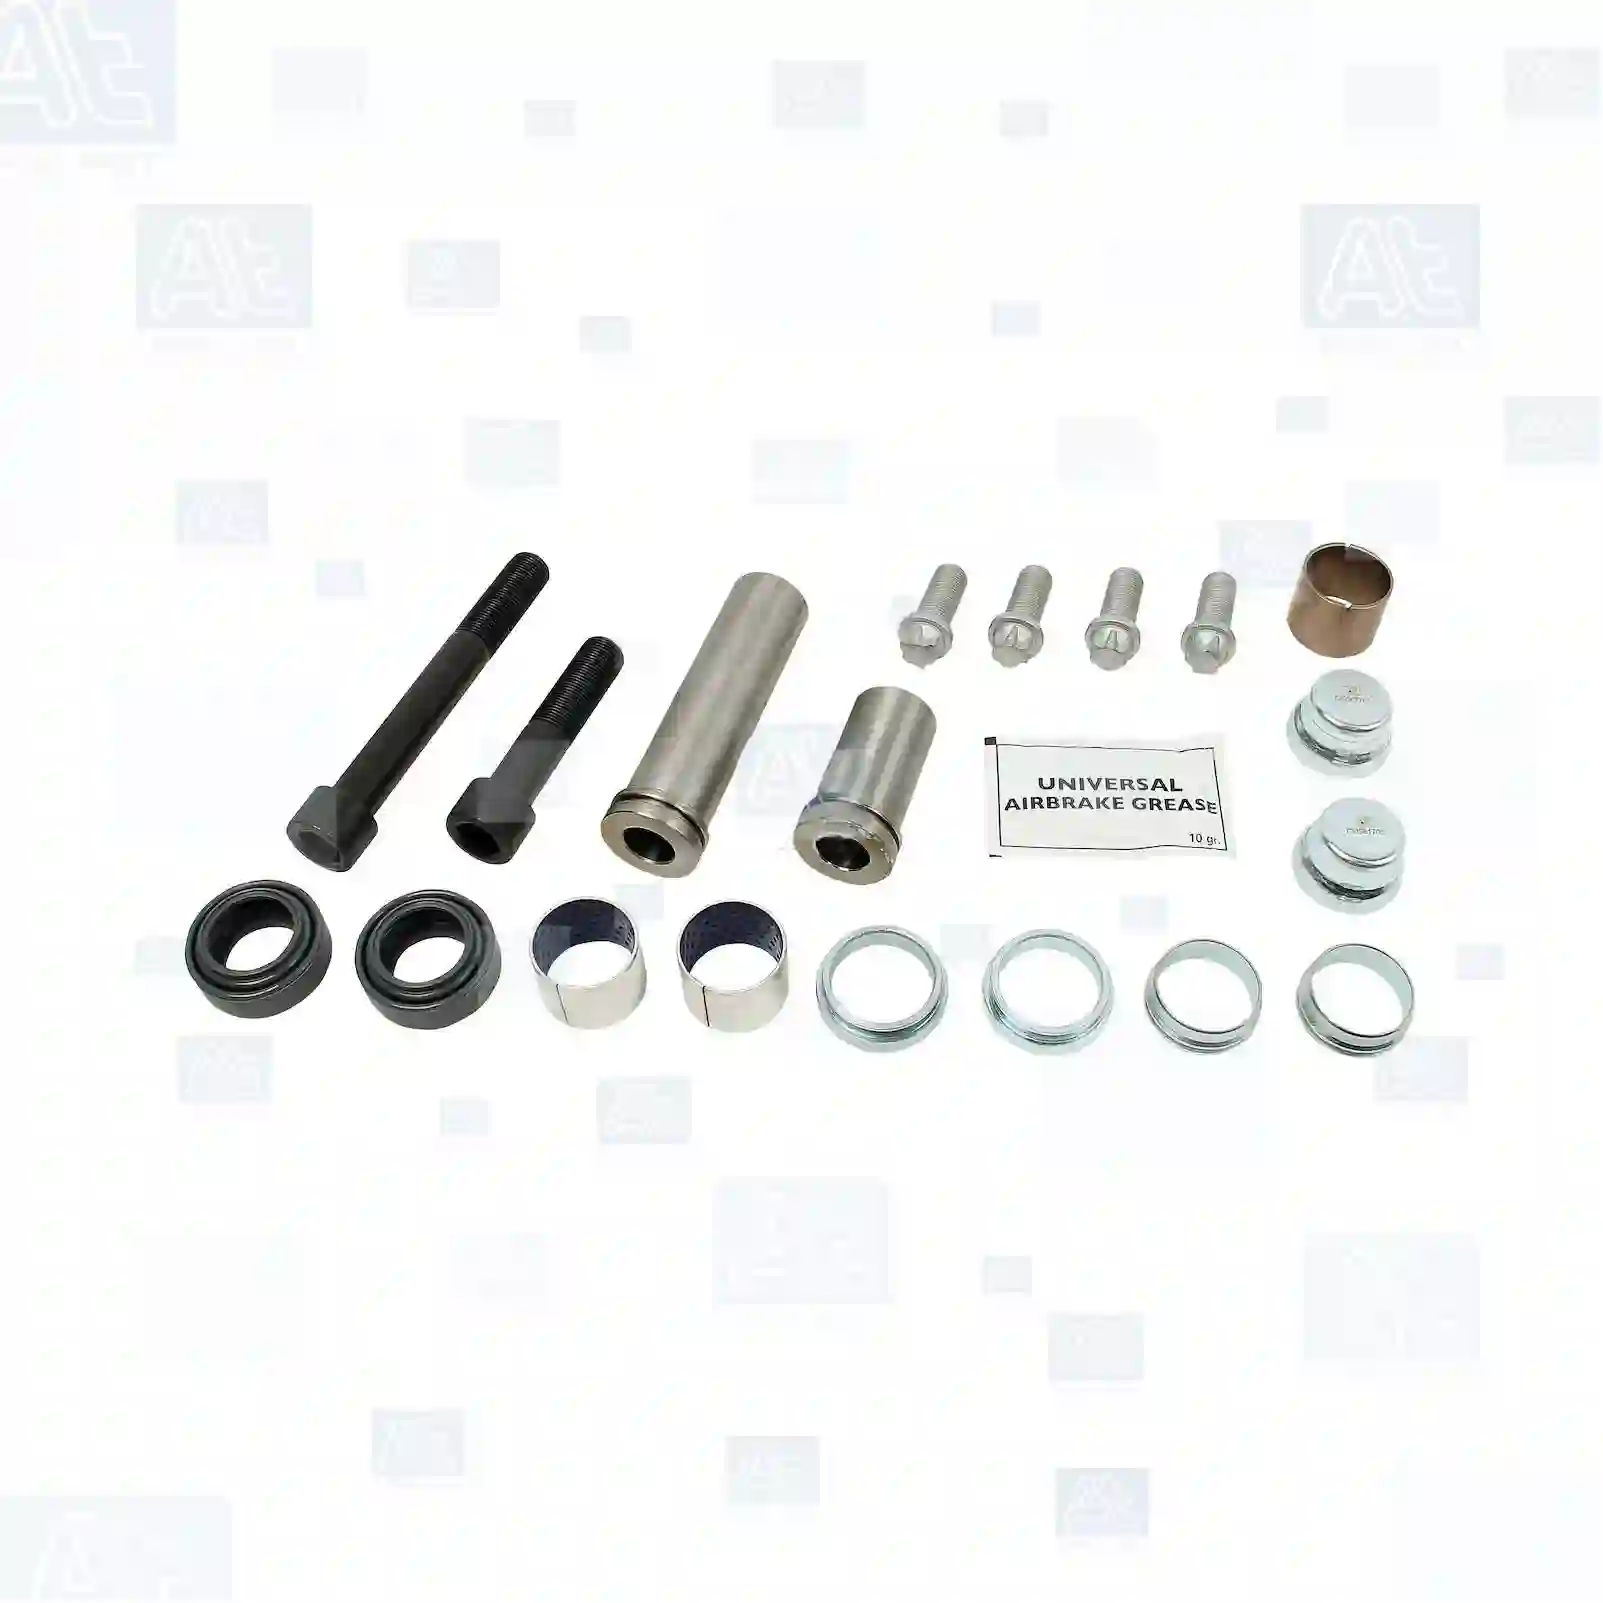 Brake Caliper Repair kit, brake caliper, at no: 77714545 ,  oem no:1522034, 81508026017, 81508026020, 81508026021, MCK1102, 10770779 At Spare Part | Engine, Accelerator Pedal, Camshaft, Connecting Rod, Crankcase, Crankshaft, Cylinder Head, Engine Suspension Mountings, Exhaust Manifold, Exhaust Gas Recirculation, Filter Kits, Flywheel Housing, General Overhaul Kits, Engine, Intake Manifold, Oil Cleaner, Oil Cooler, Oil Filter, Oil Pump, Oil Sump, Piston & Liner, Sensor & Switch, Timing Case, Turbocharger, Cooling System, Belt Tensioner, Coolant Filter, Coolant Pipe, Corrosion Prevention Agent, Drive, Expansion Tank, Fan, Intercooler, Monitors & Gauges, Radiator, Thermostat, V-Belt / Timing belt, Water Pump, Fuel System, Electronical Injector Unit, Feed Pump, Fuel Filter, cpl., Fuel Gauge Sender,  Fuel Line, Fuel Pump, Fuel Tank, Injection Line Kit, Injection Pump, Exhaust System, Clutch & Pedal, Gearbox, Propeller Shaft, Axles, Brake System, Hubs & Wheels, Suspension, Leaf Spring, Universal Parts / Accessories, Steering, Electrical System, Cabin